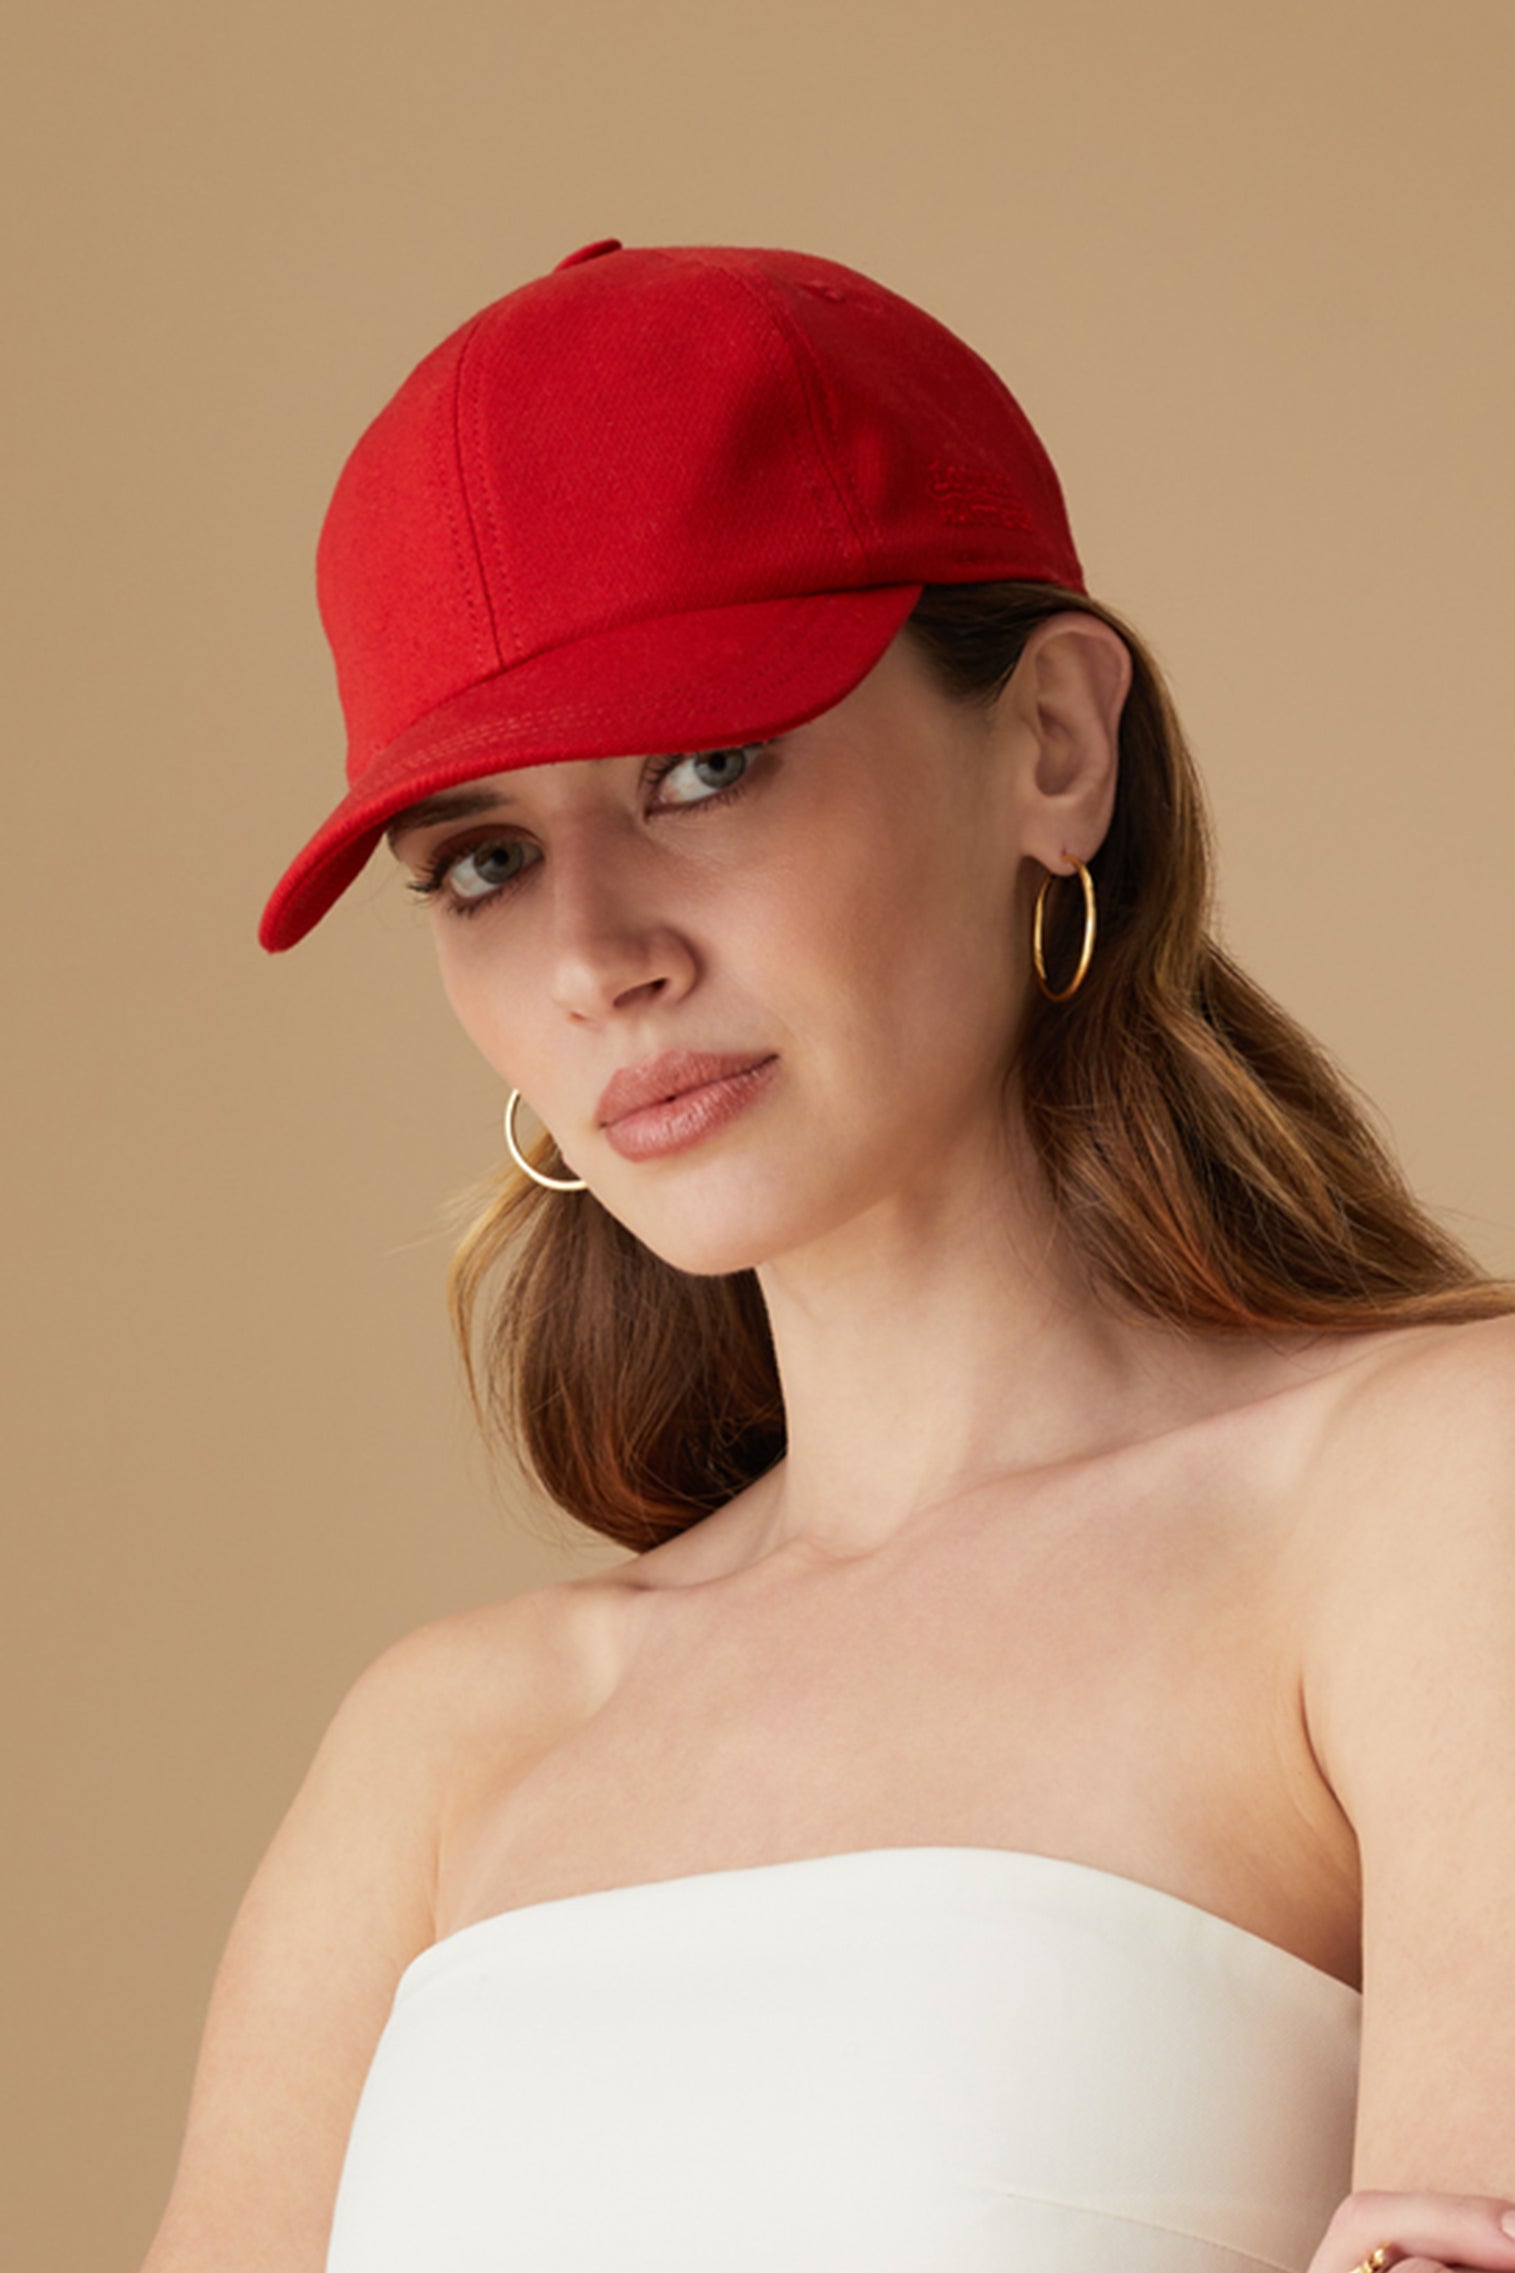 Adjustable Red Baseball Cap - Baseball Caps - Lock & Co. Hatters London UK